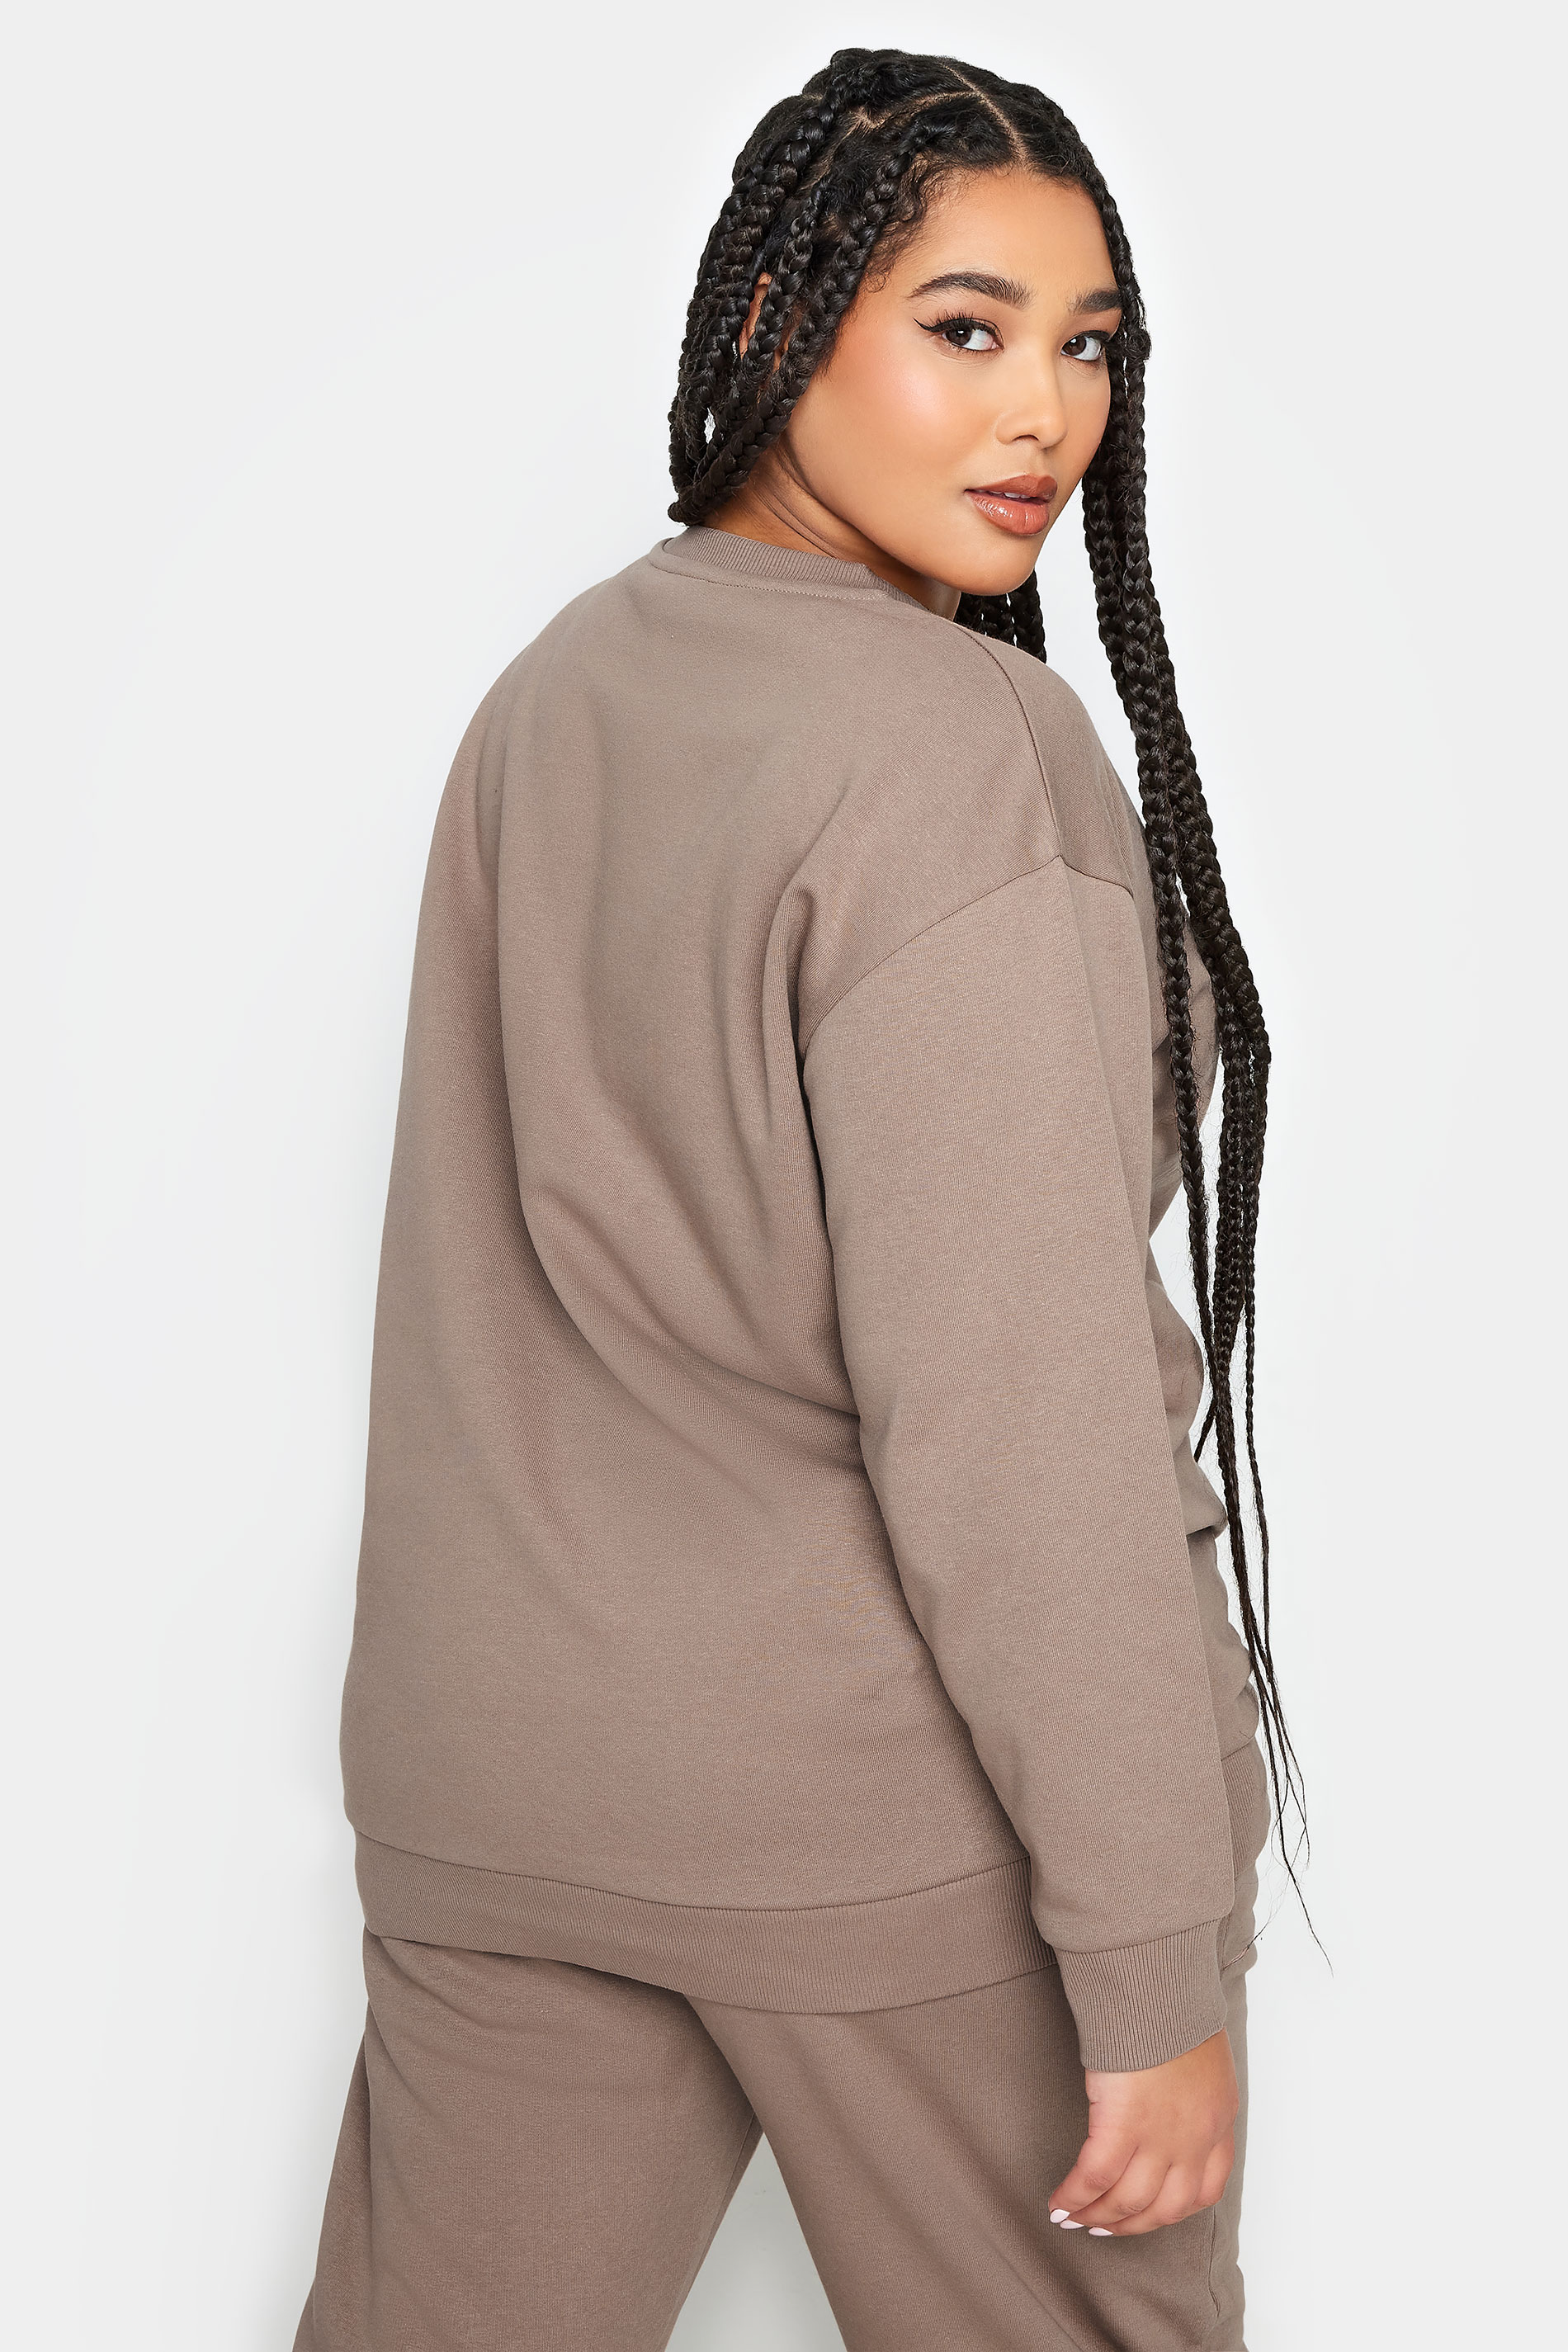 YOURS Plus Size Mocha Brown Crew Neck Sweatshirt | Yours Clothing 3